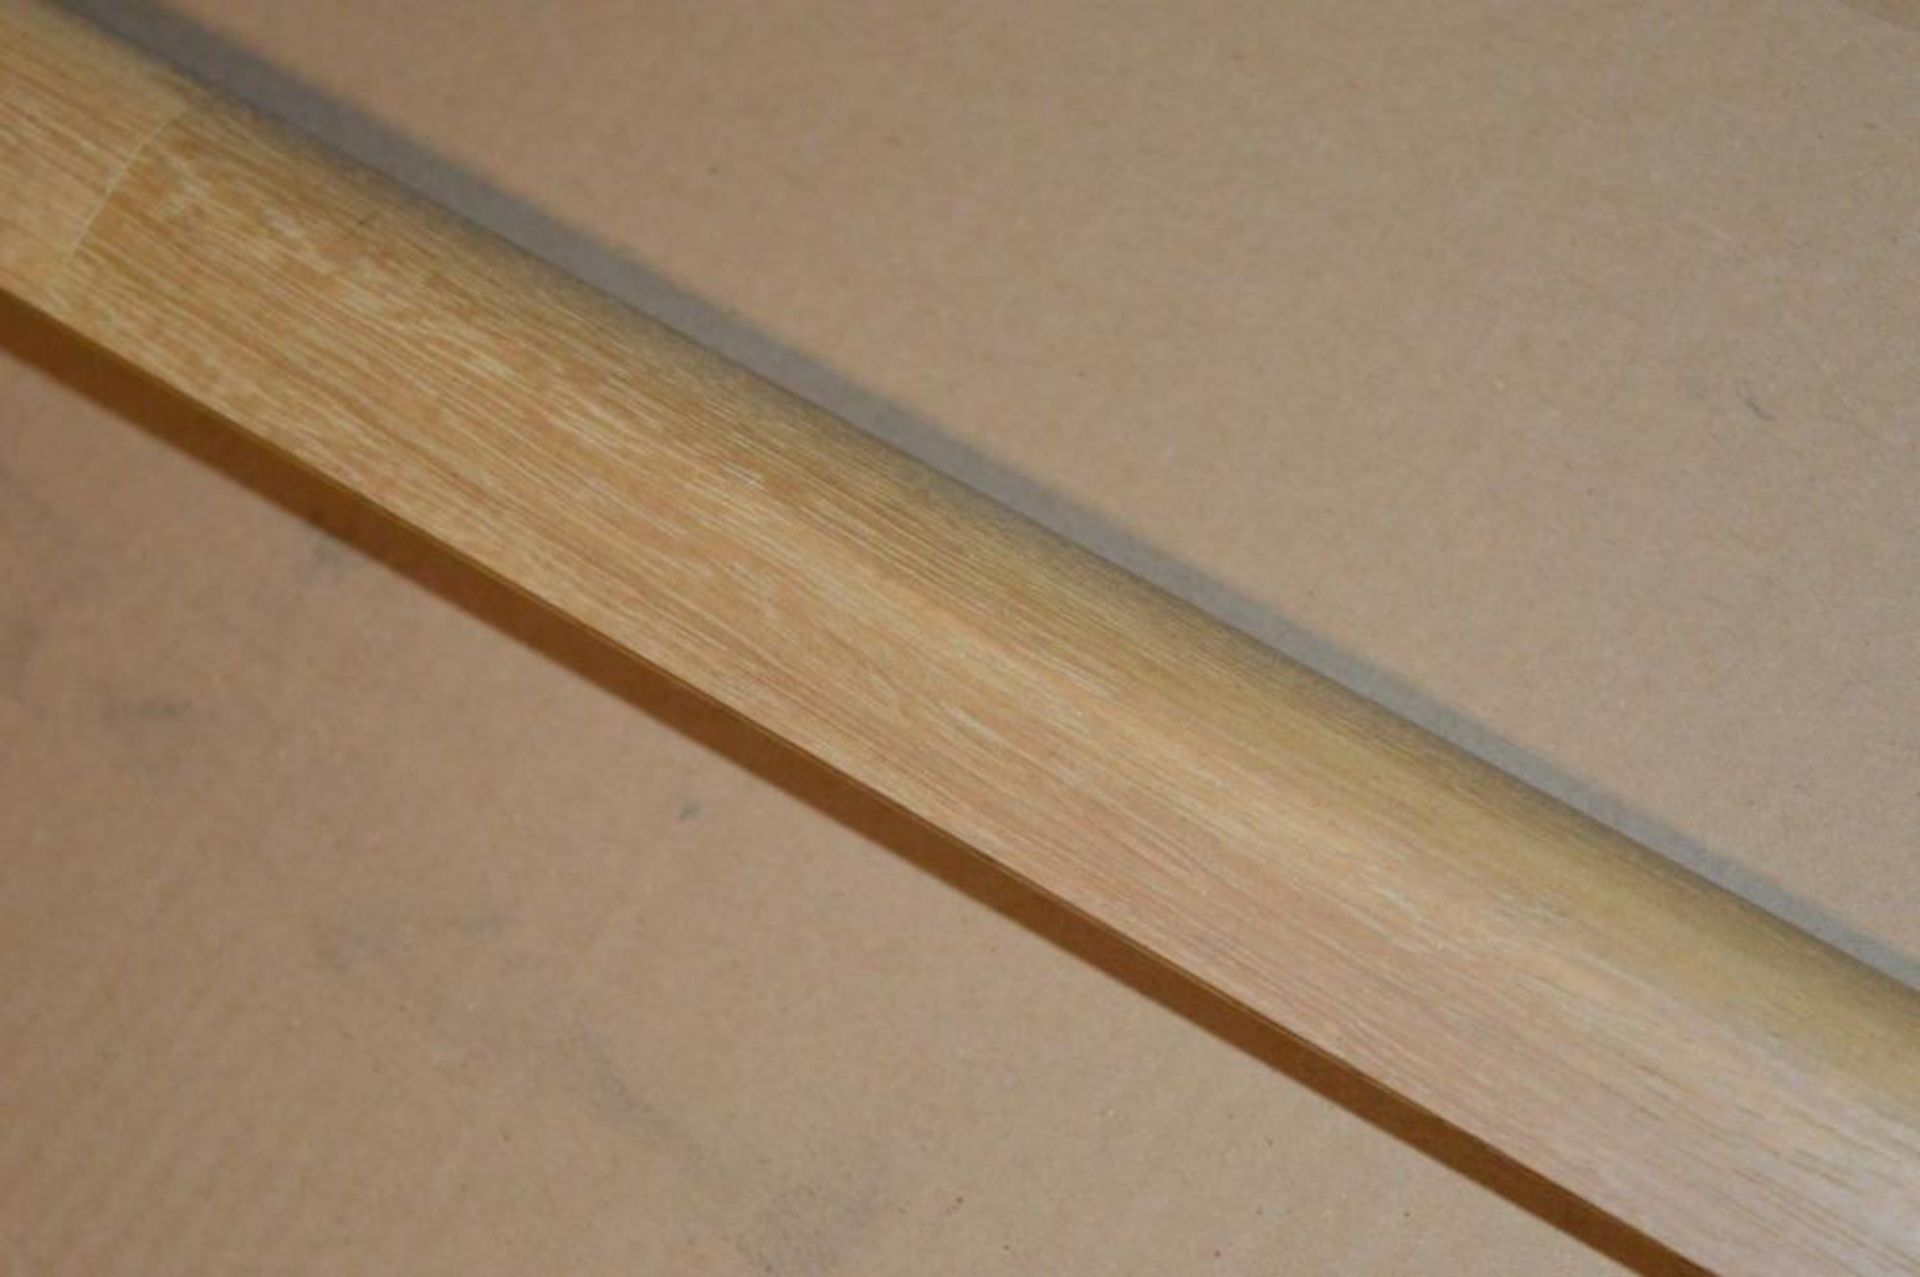 1 x Solid Wood Kitchen Worktop Upstand - IROKO - Size: 3000 x 40 x 18mm - Untreated - Brand New Seal